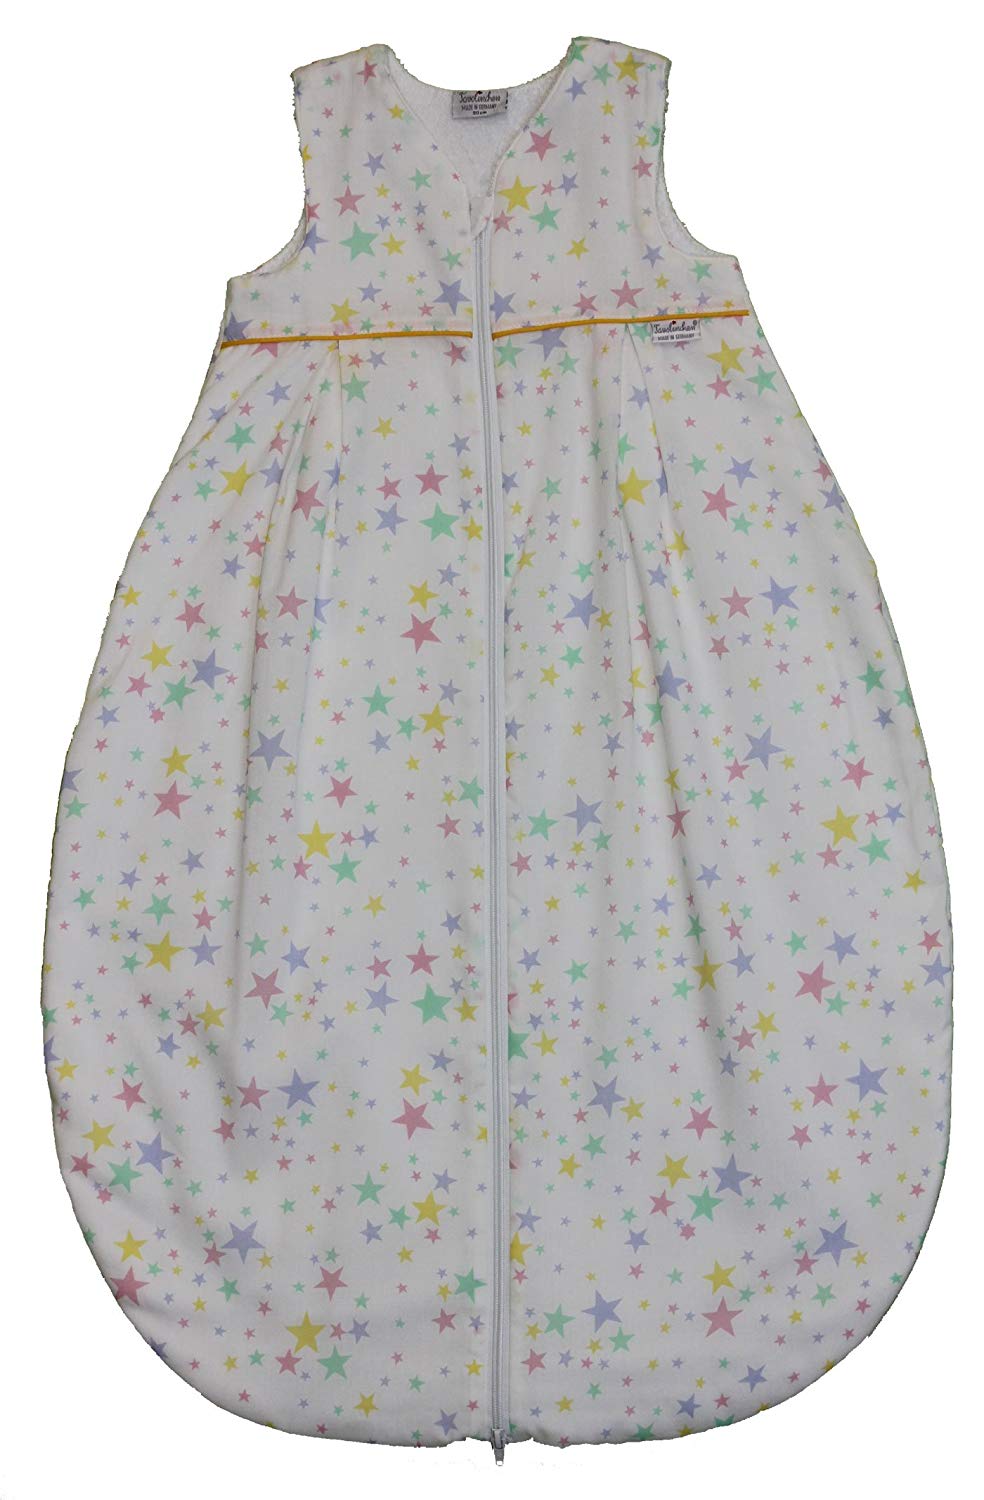 Tavolinchen 35/1585 Terry Cloth Stars Sleeping Bag 110 cm 130 cm original